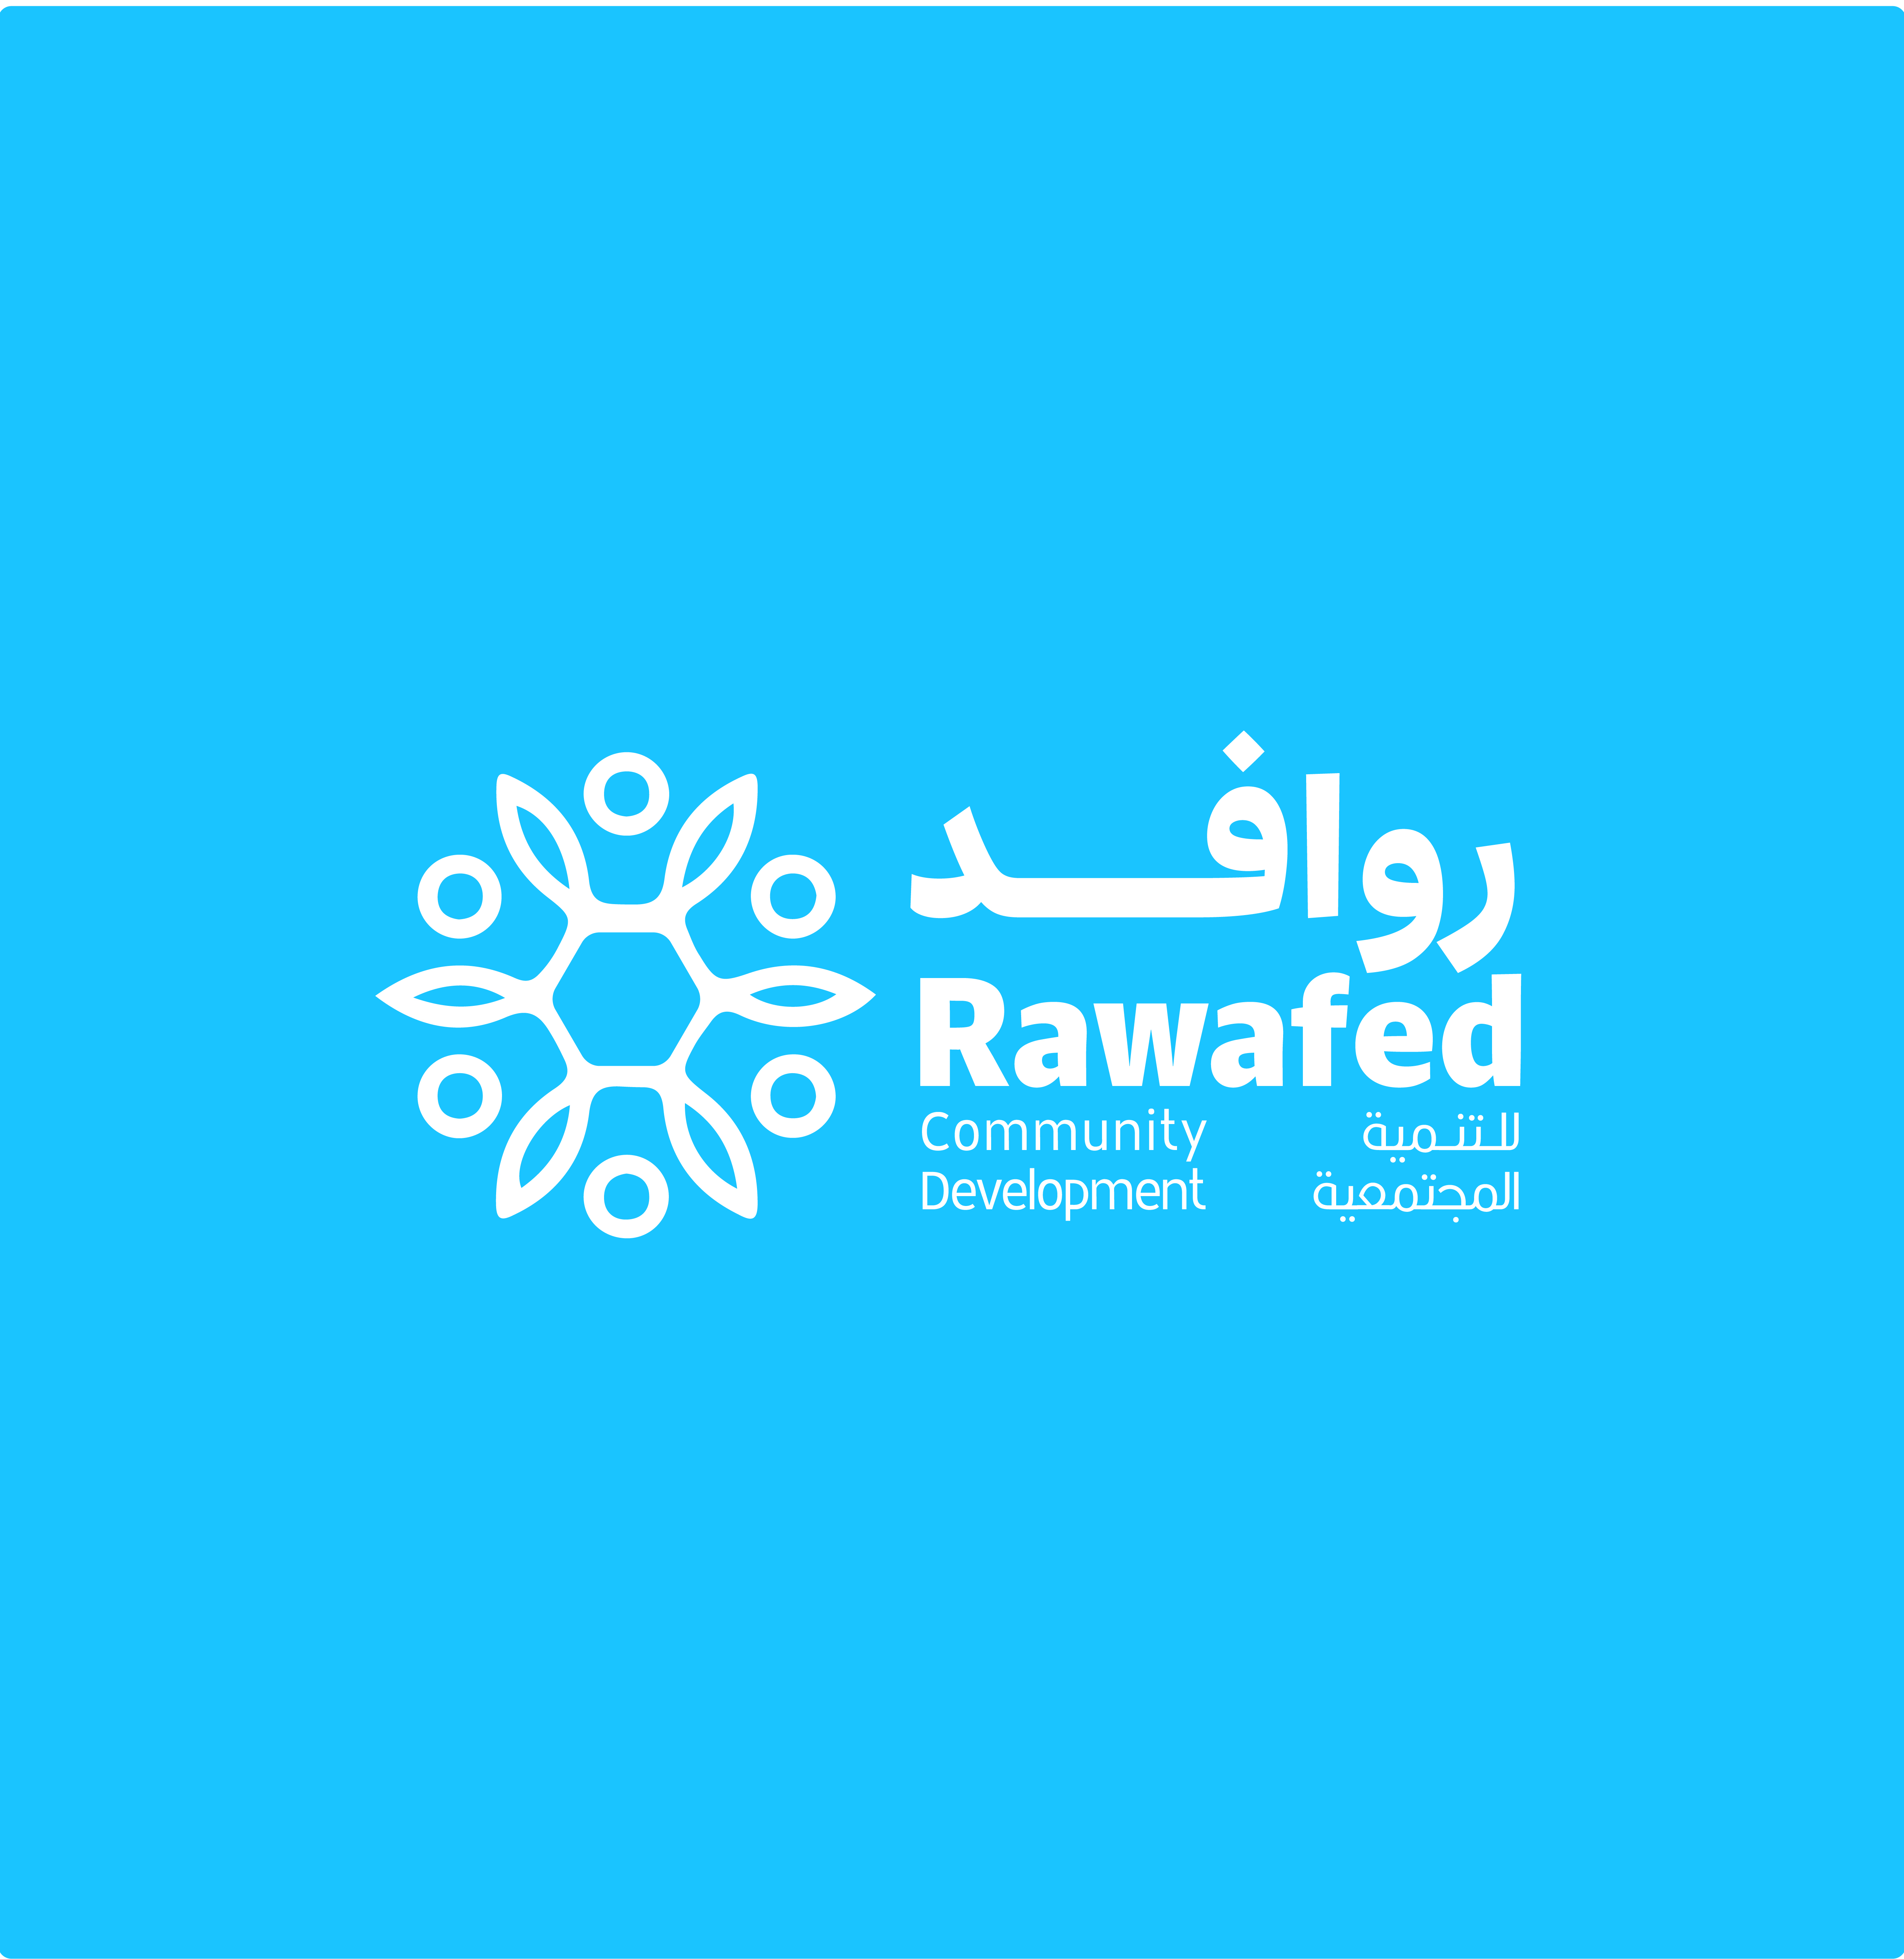 Rawafed community development